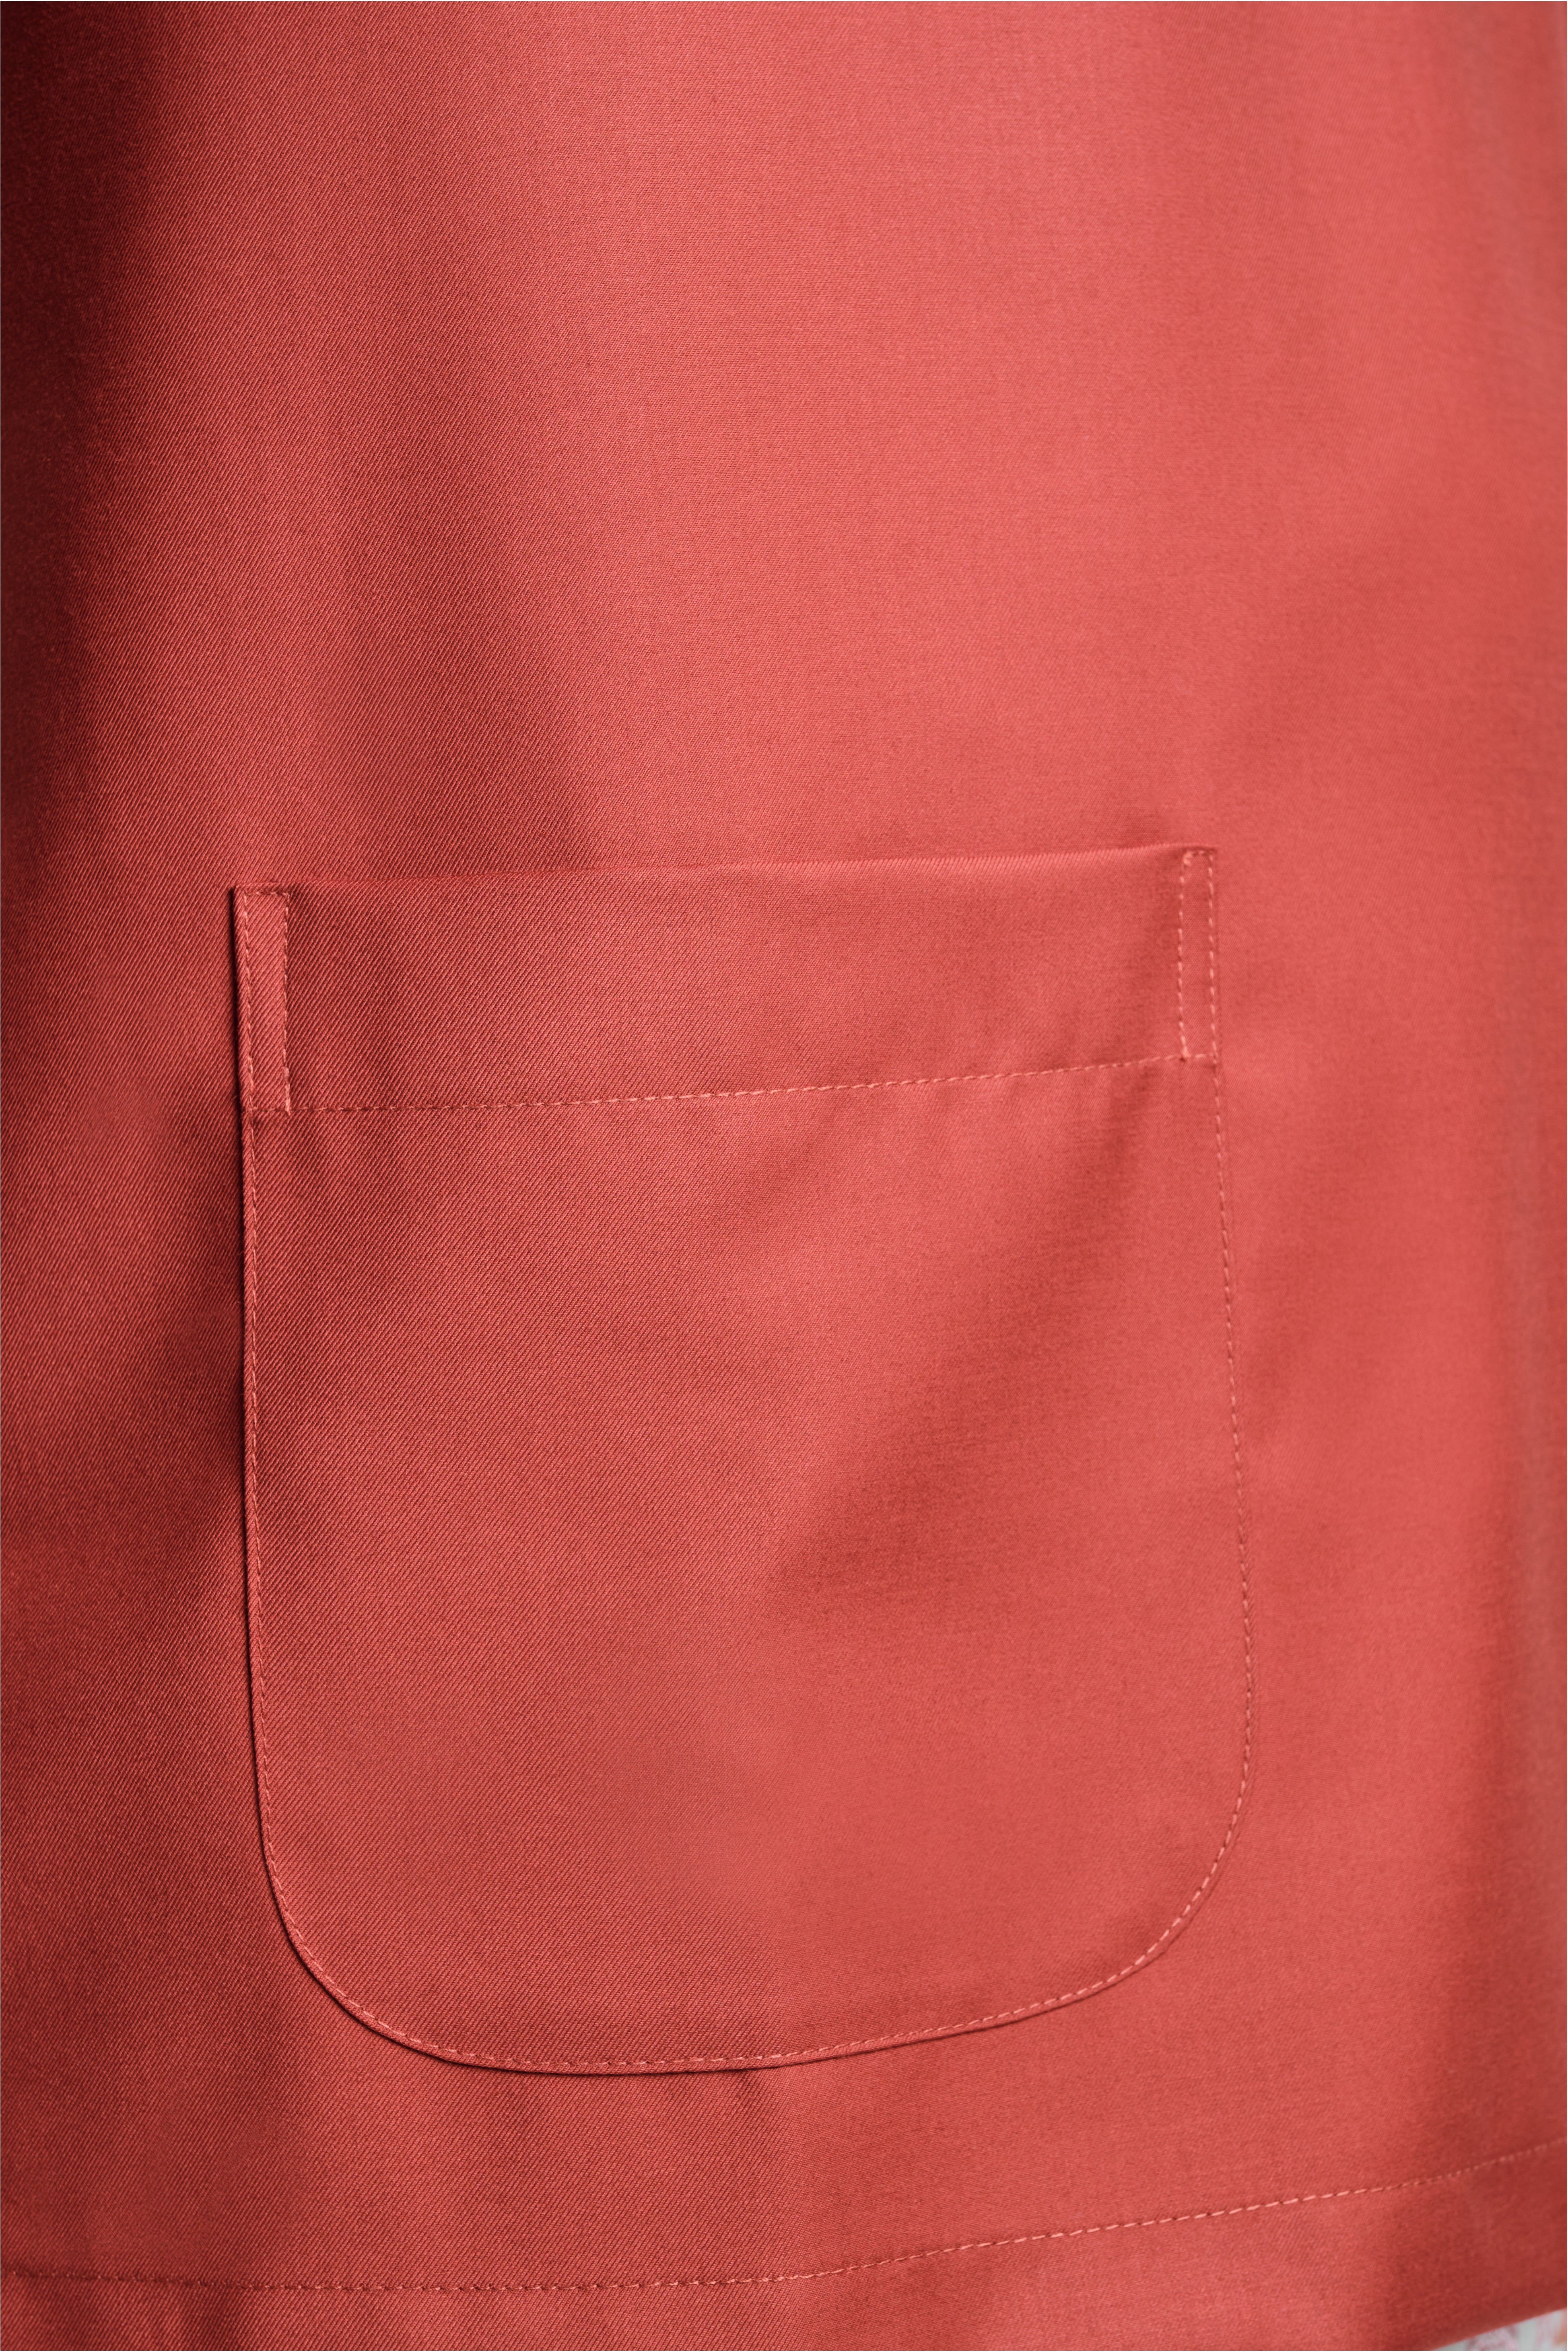 Patawali Modern Fit Baju Melayu Teluk Belanga - Brick Red